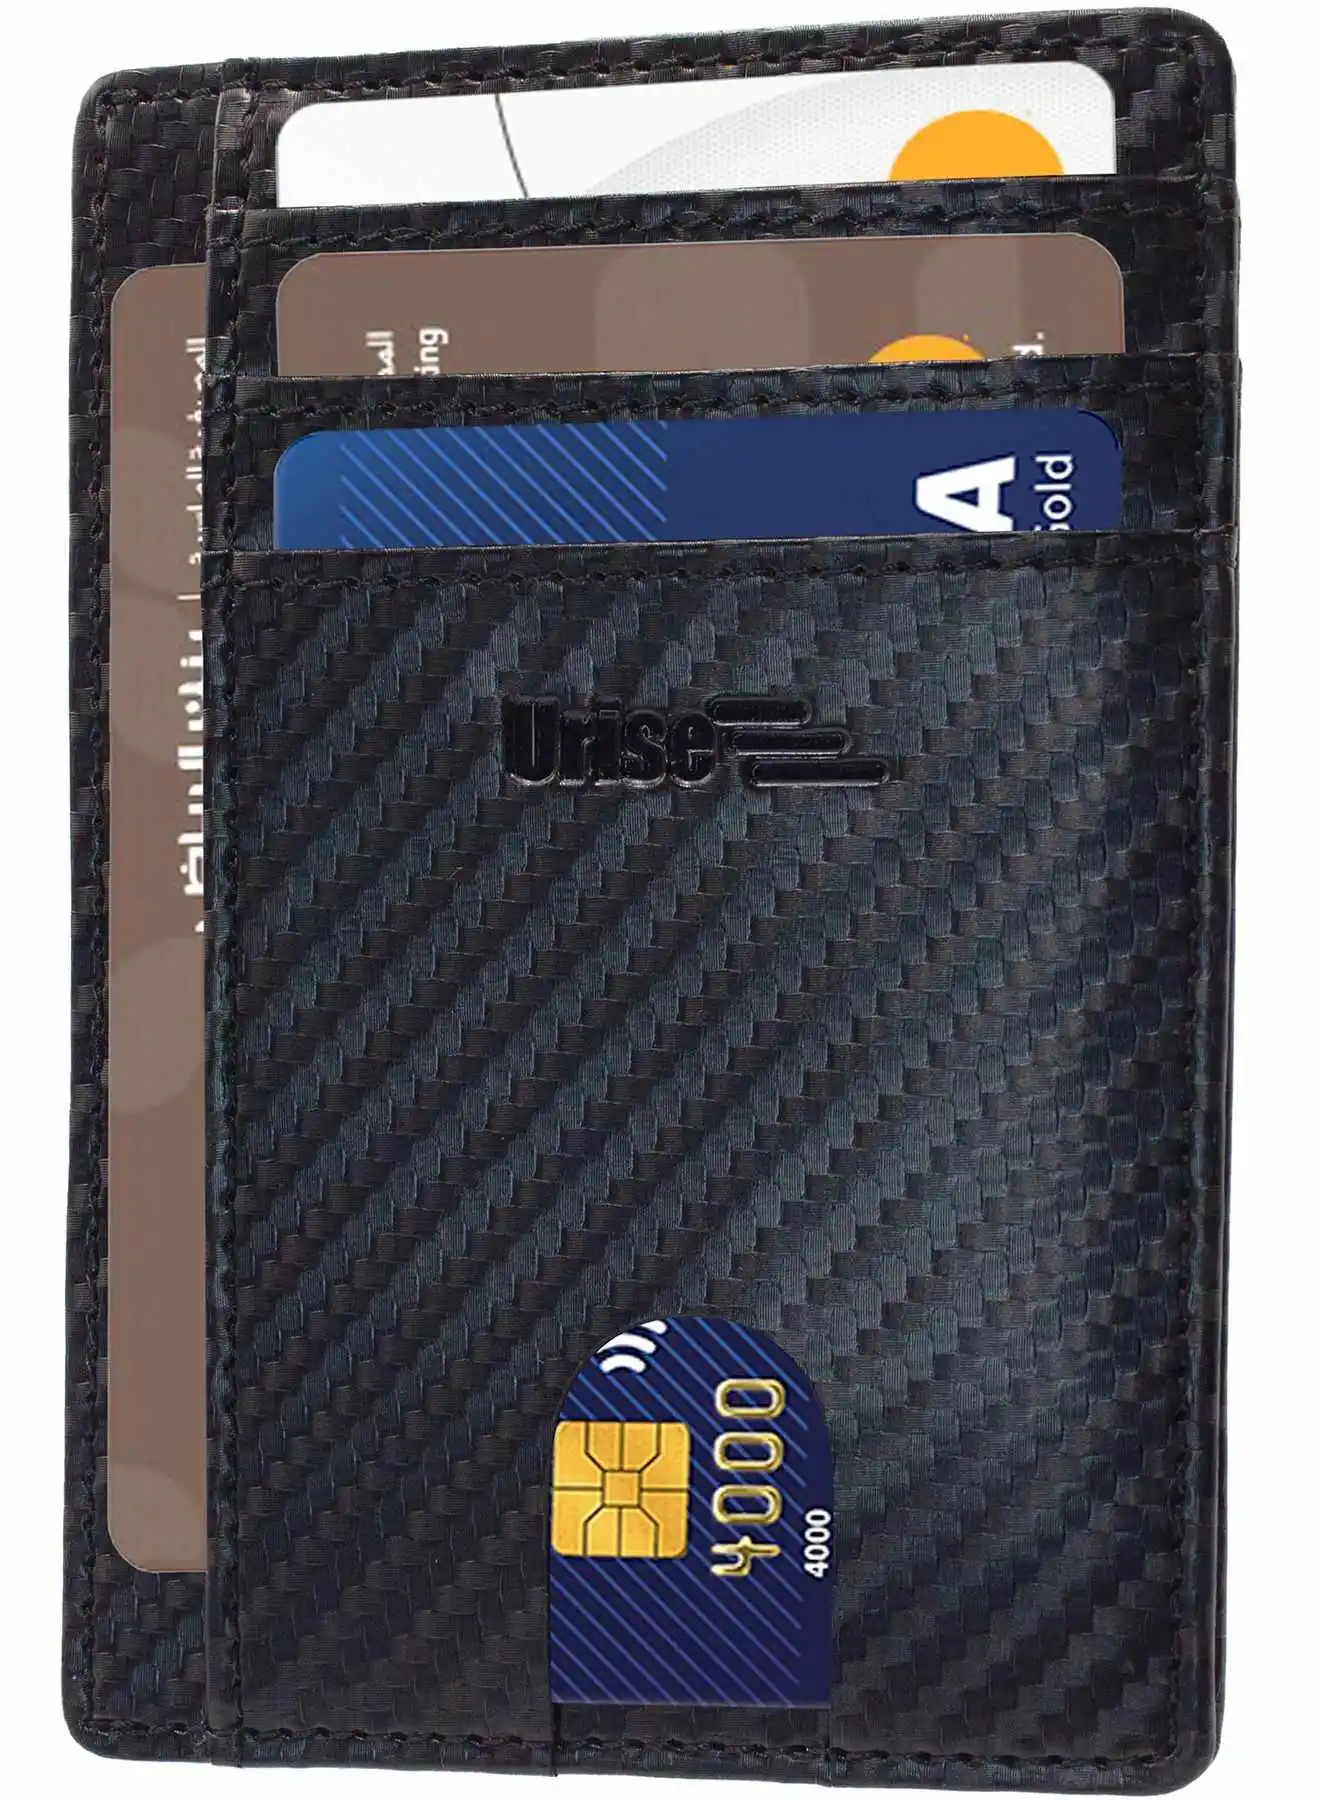 Urise Premium Leather Wallet for Men – RFID Blocking, Minimalist Design, Card & Money Holder, Durable, Multi-Card Capacity